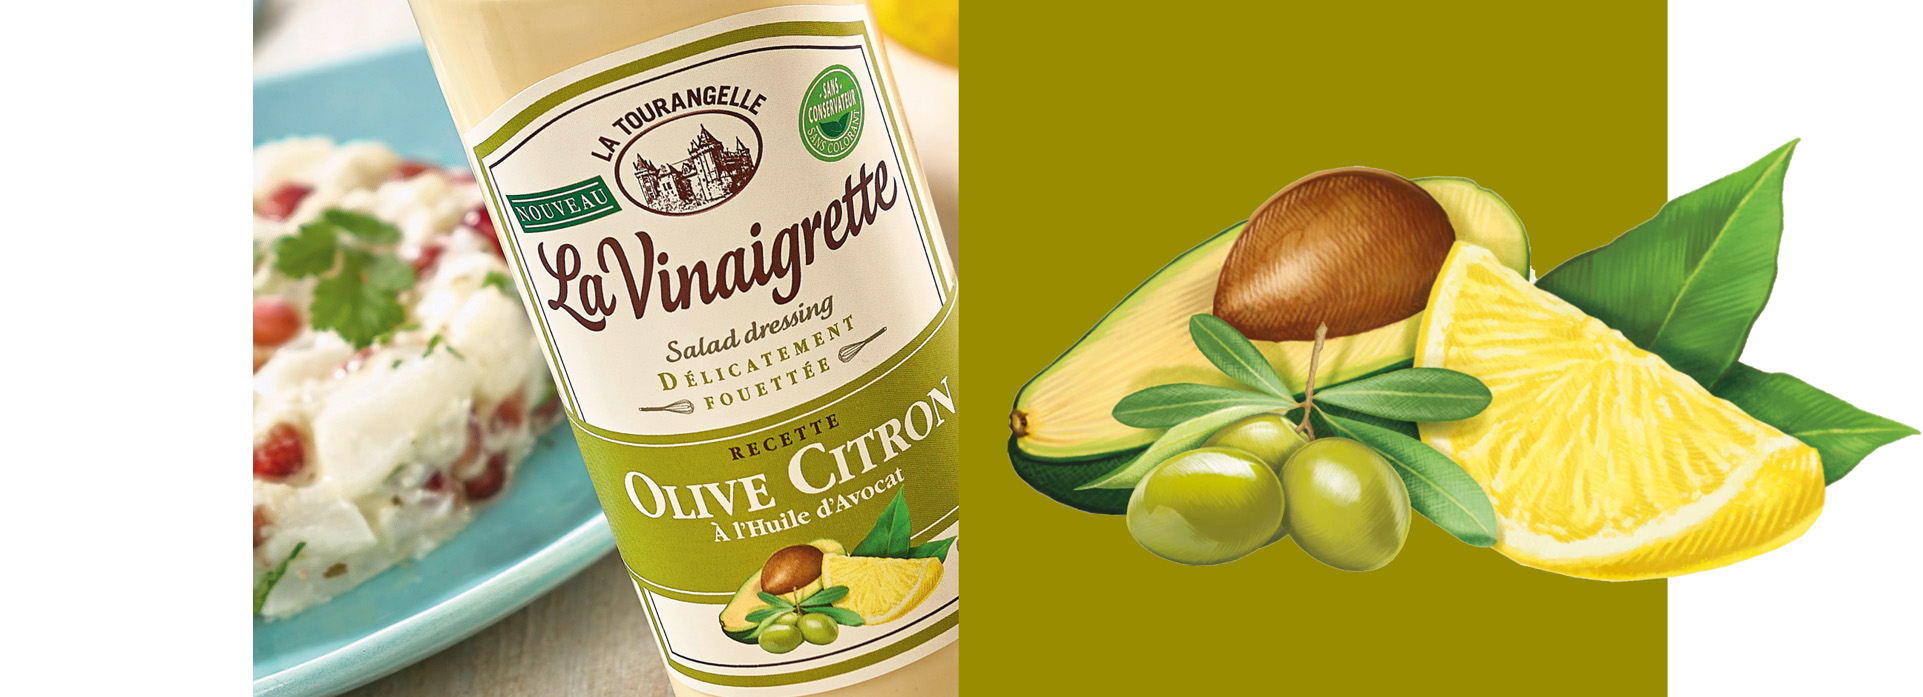 olive citron Vinaigrette packaging la tourangelle VIKIU